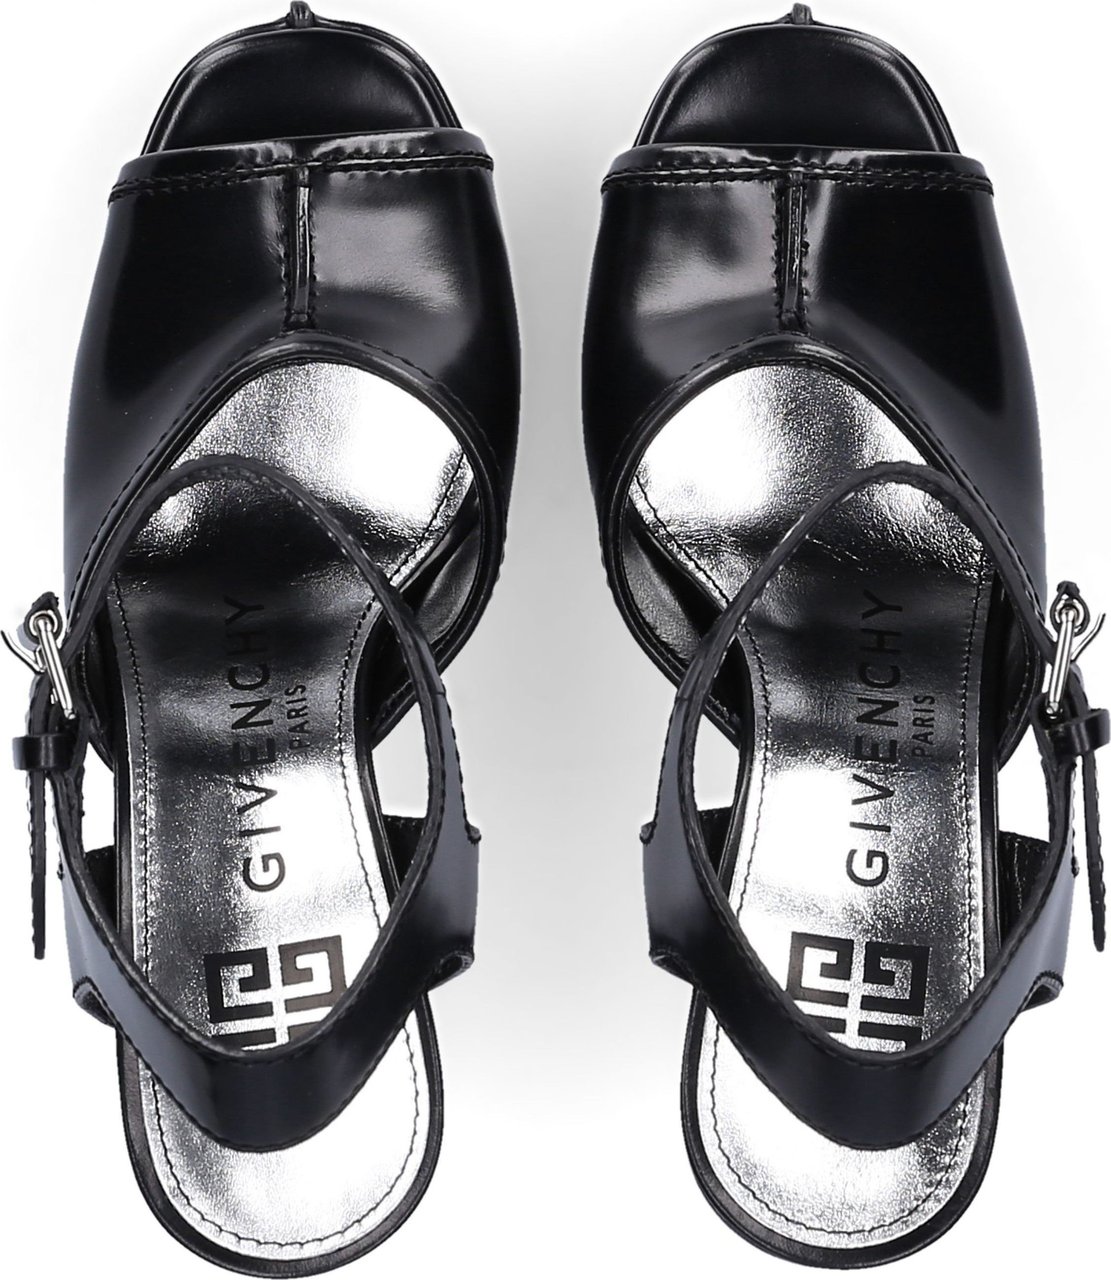 Givenchy Women Platform Sandals BE - Lombardi Zwart